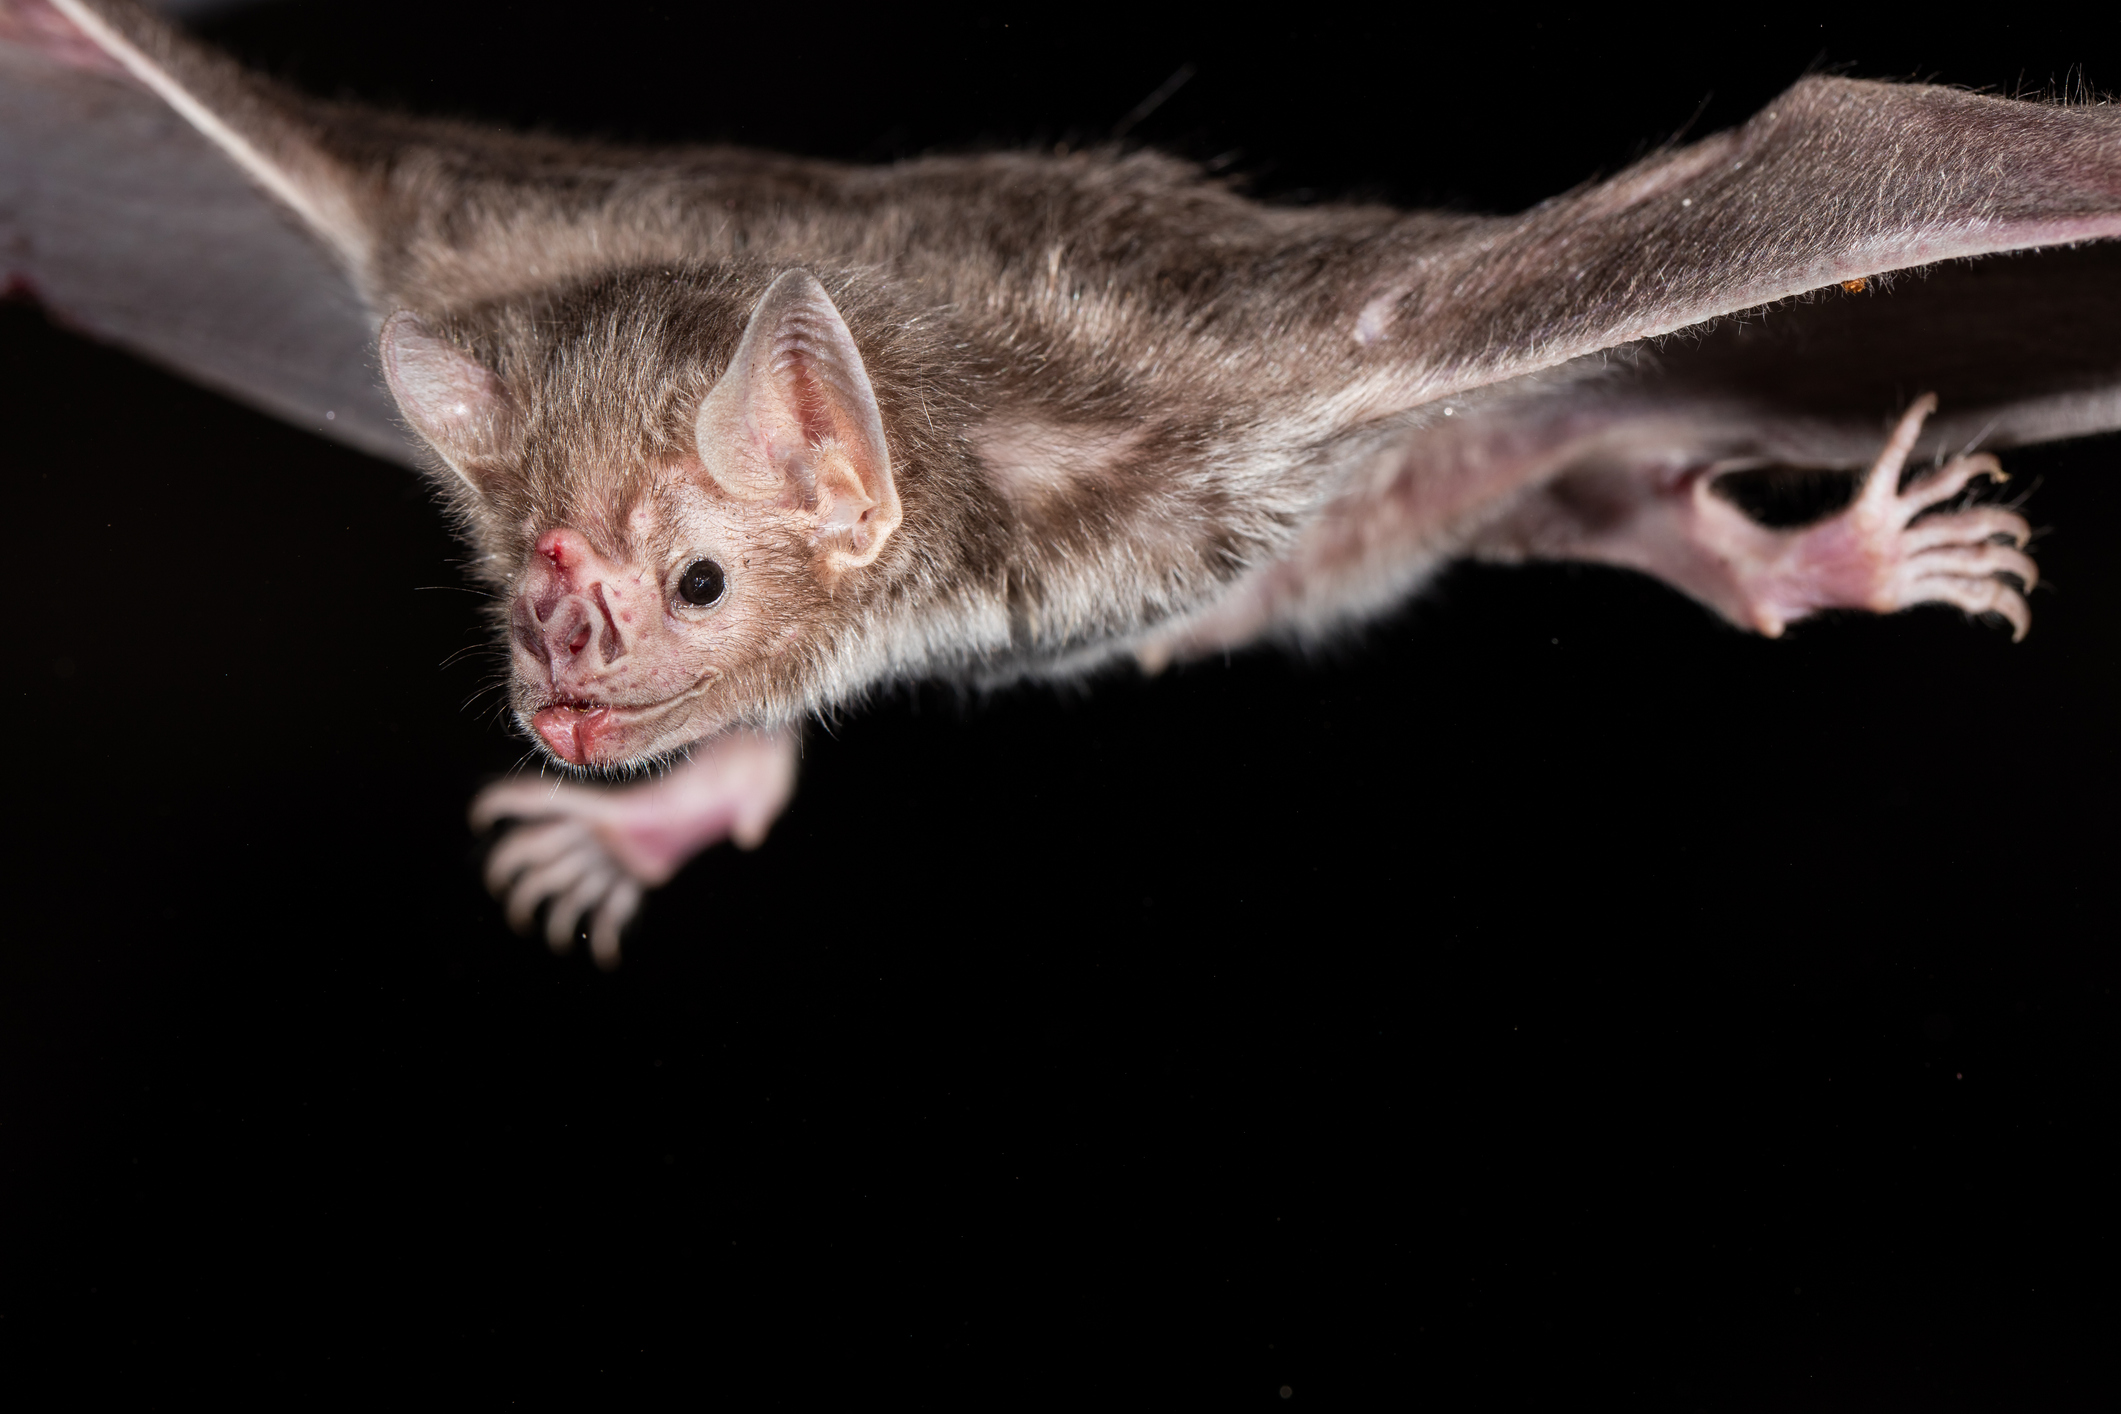 A close up of a bat mid-flight against a dark background